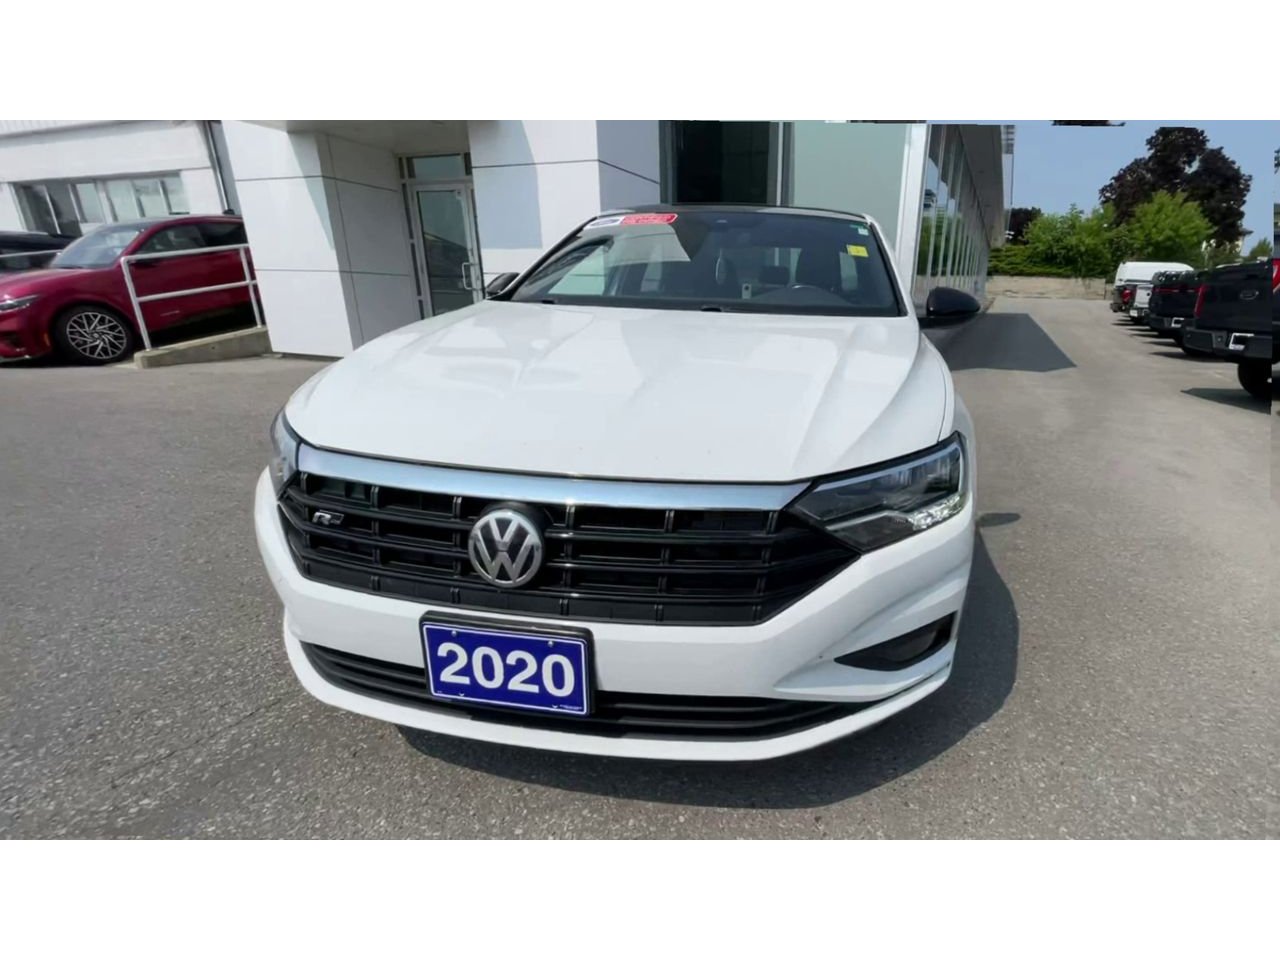 2020 Volkswagen Jetta - 21128A Full Image 3